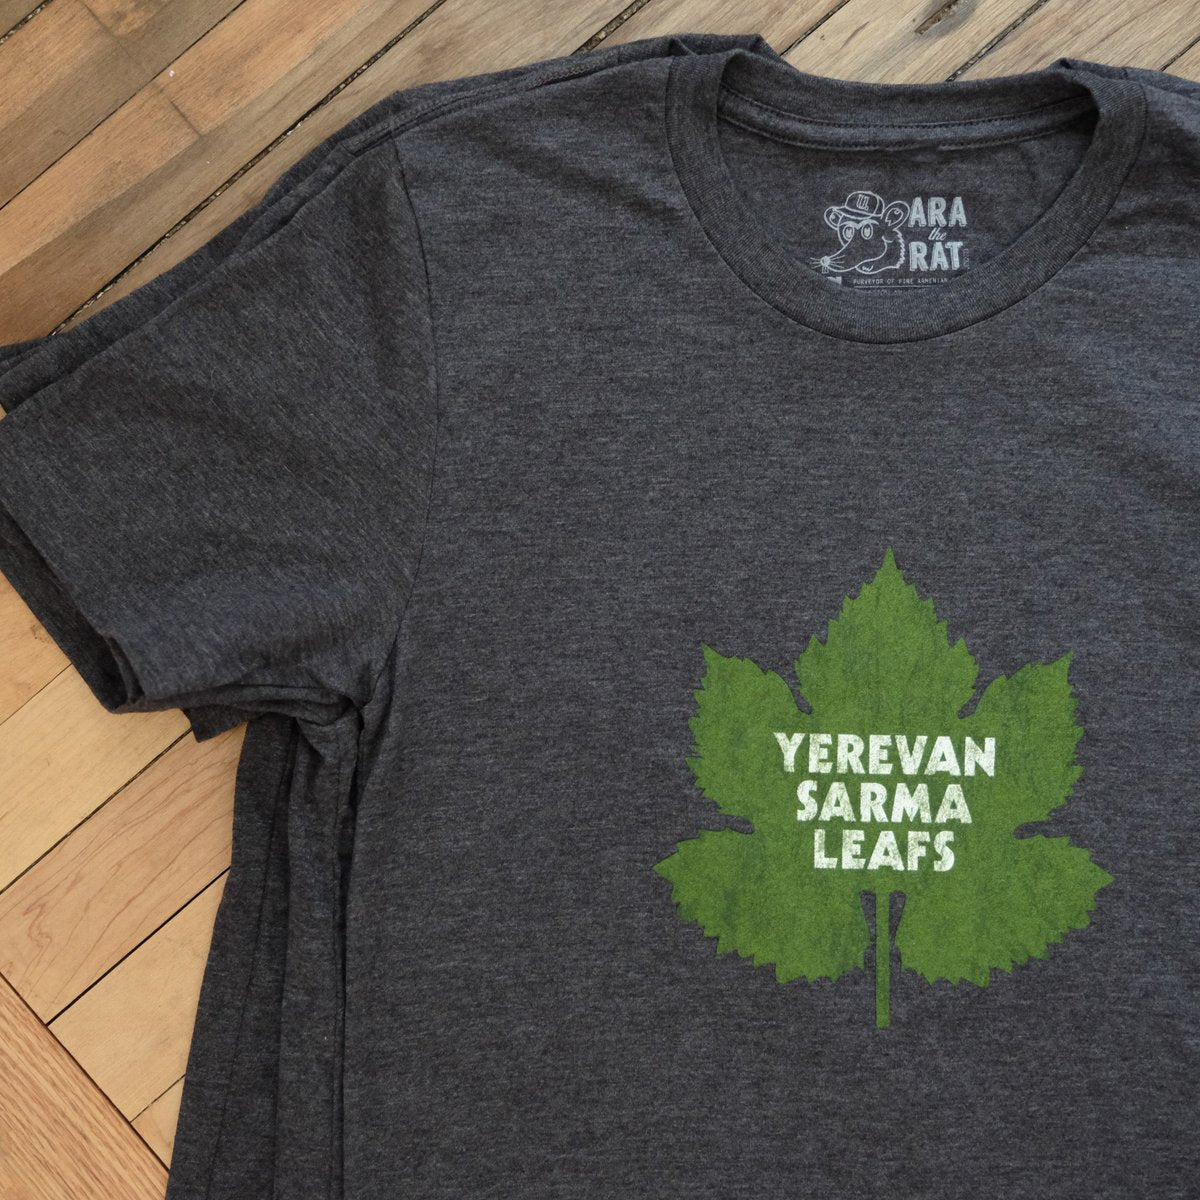 🚨ONLY ONE🚨 Yerevan Sarma Leafs T-shirt - MEDIUM